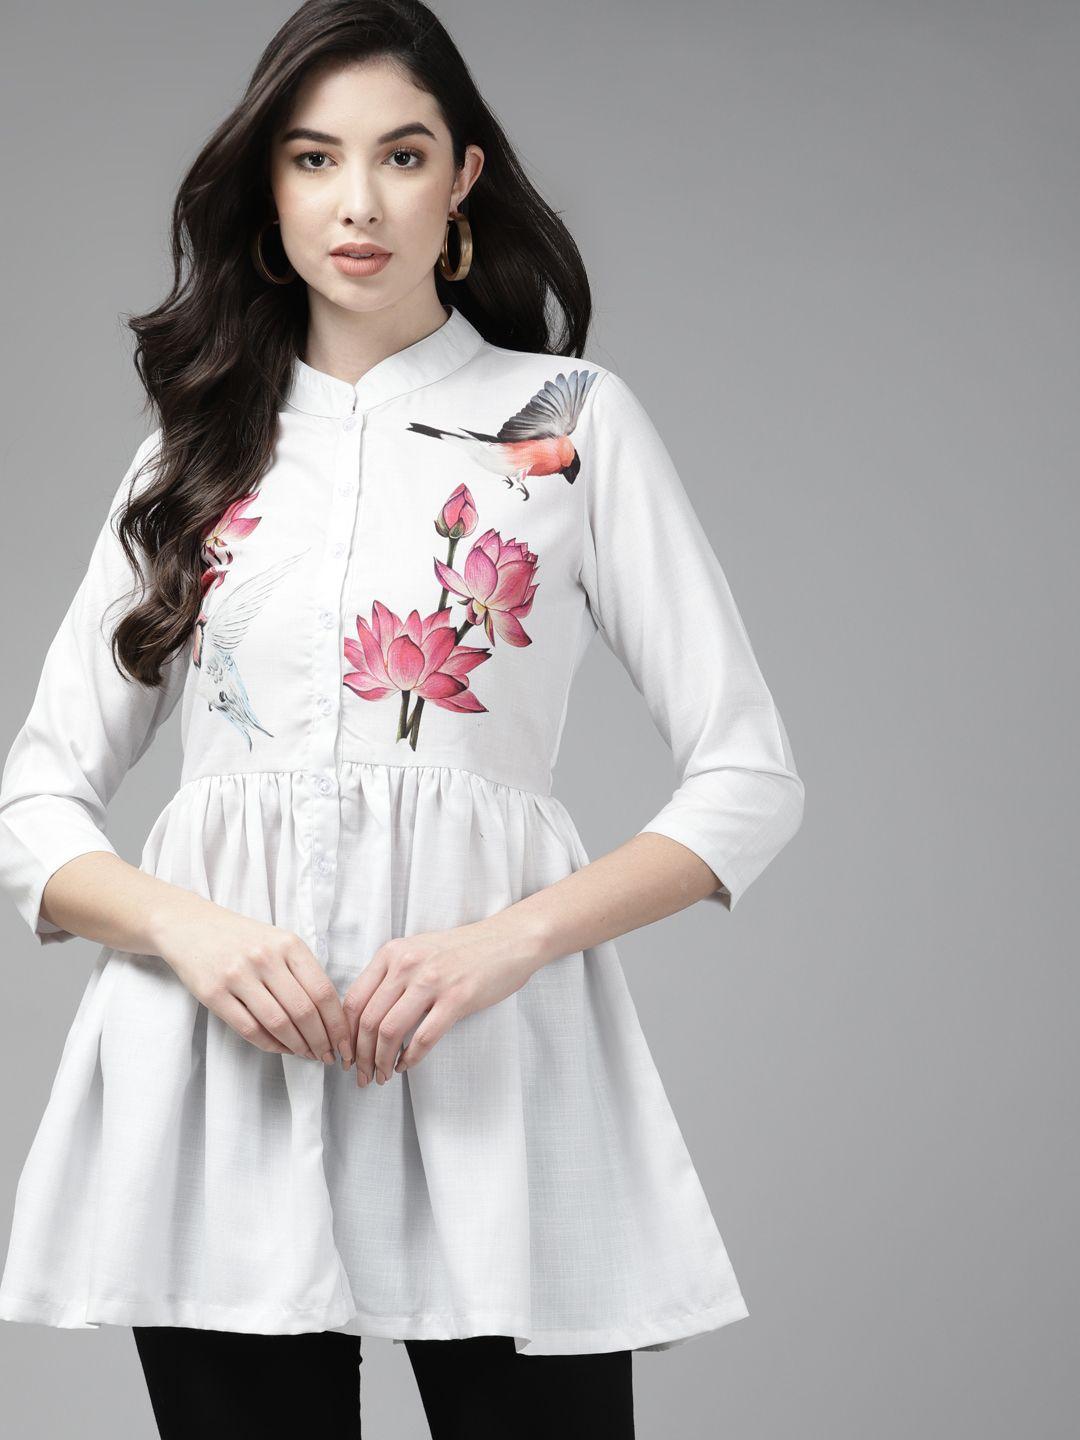 bhama couture women white & pink floral print mandarin collar peplum top